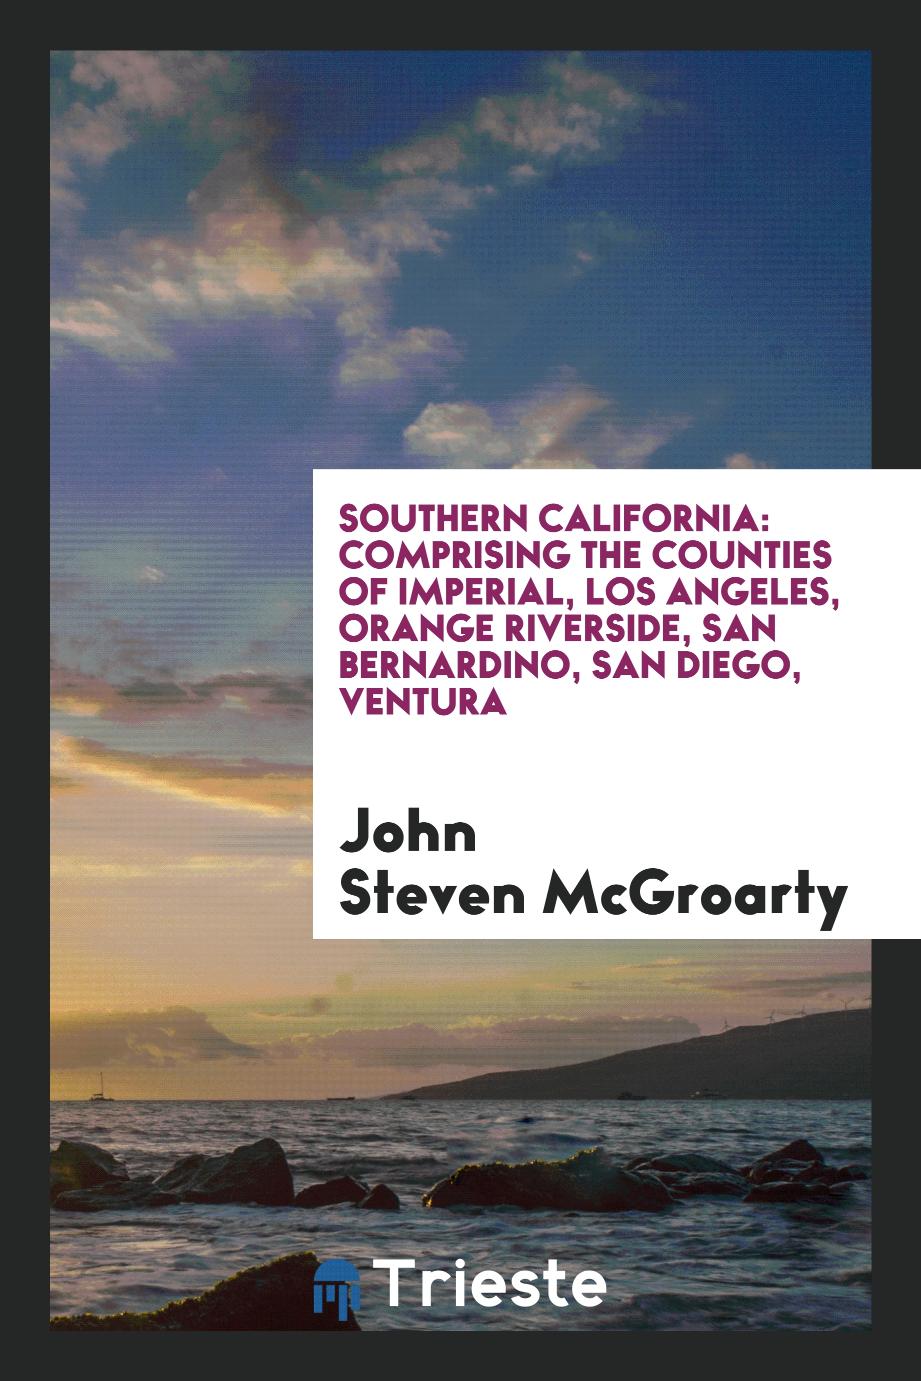 Southern California: Comprising the Counties of Imperial, Los Angeles, Orange Riverside, San Bernardino, San Diego, Ventura